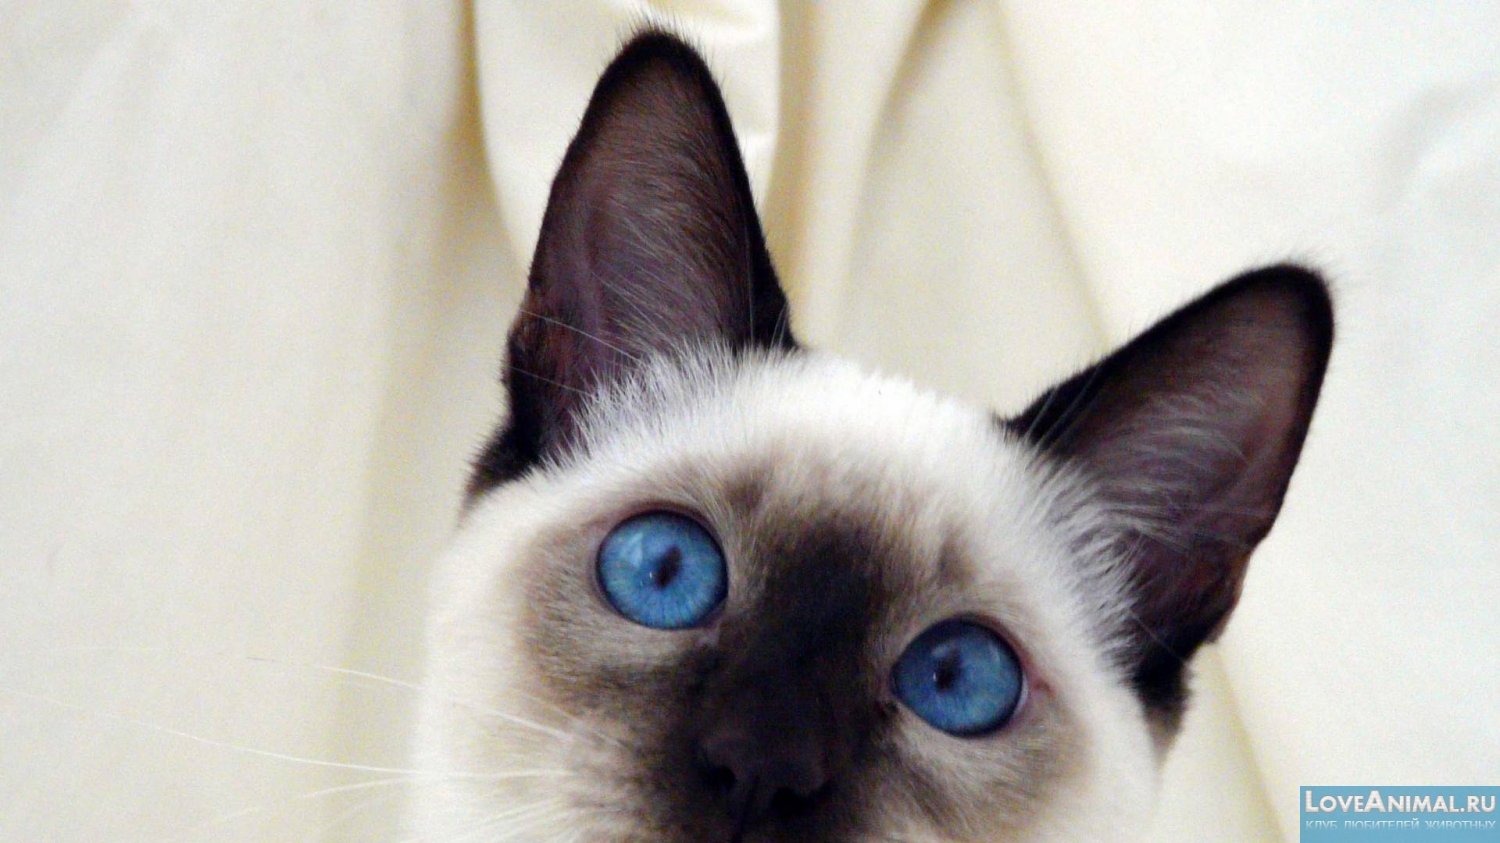 Сиам, или сиамская кошка (Siamese Cat)